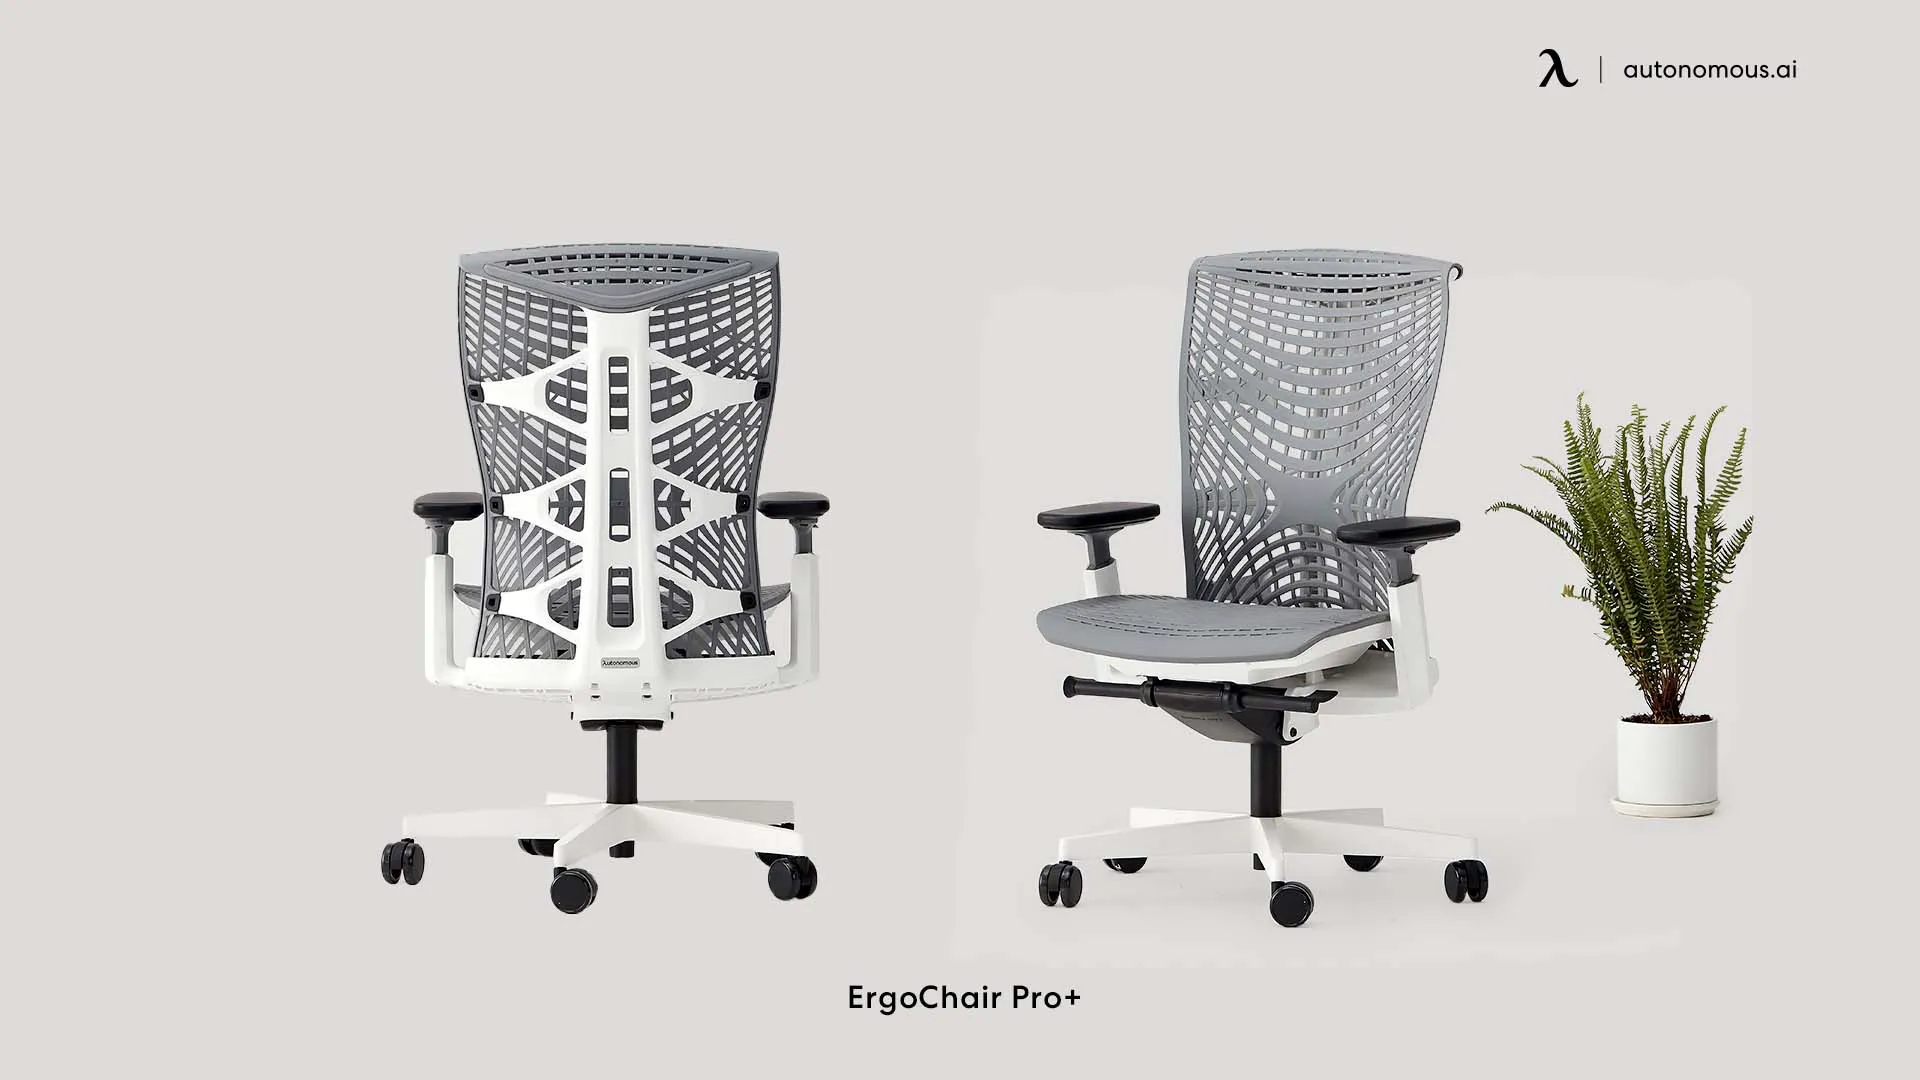 ErgoChair Plus adjustable height desk chair